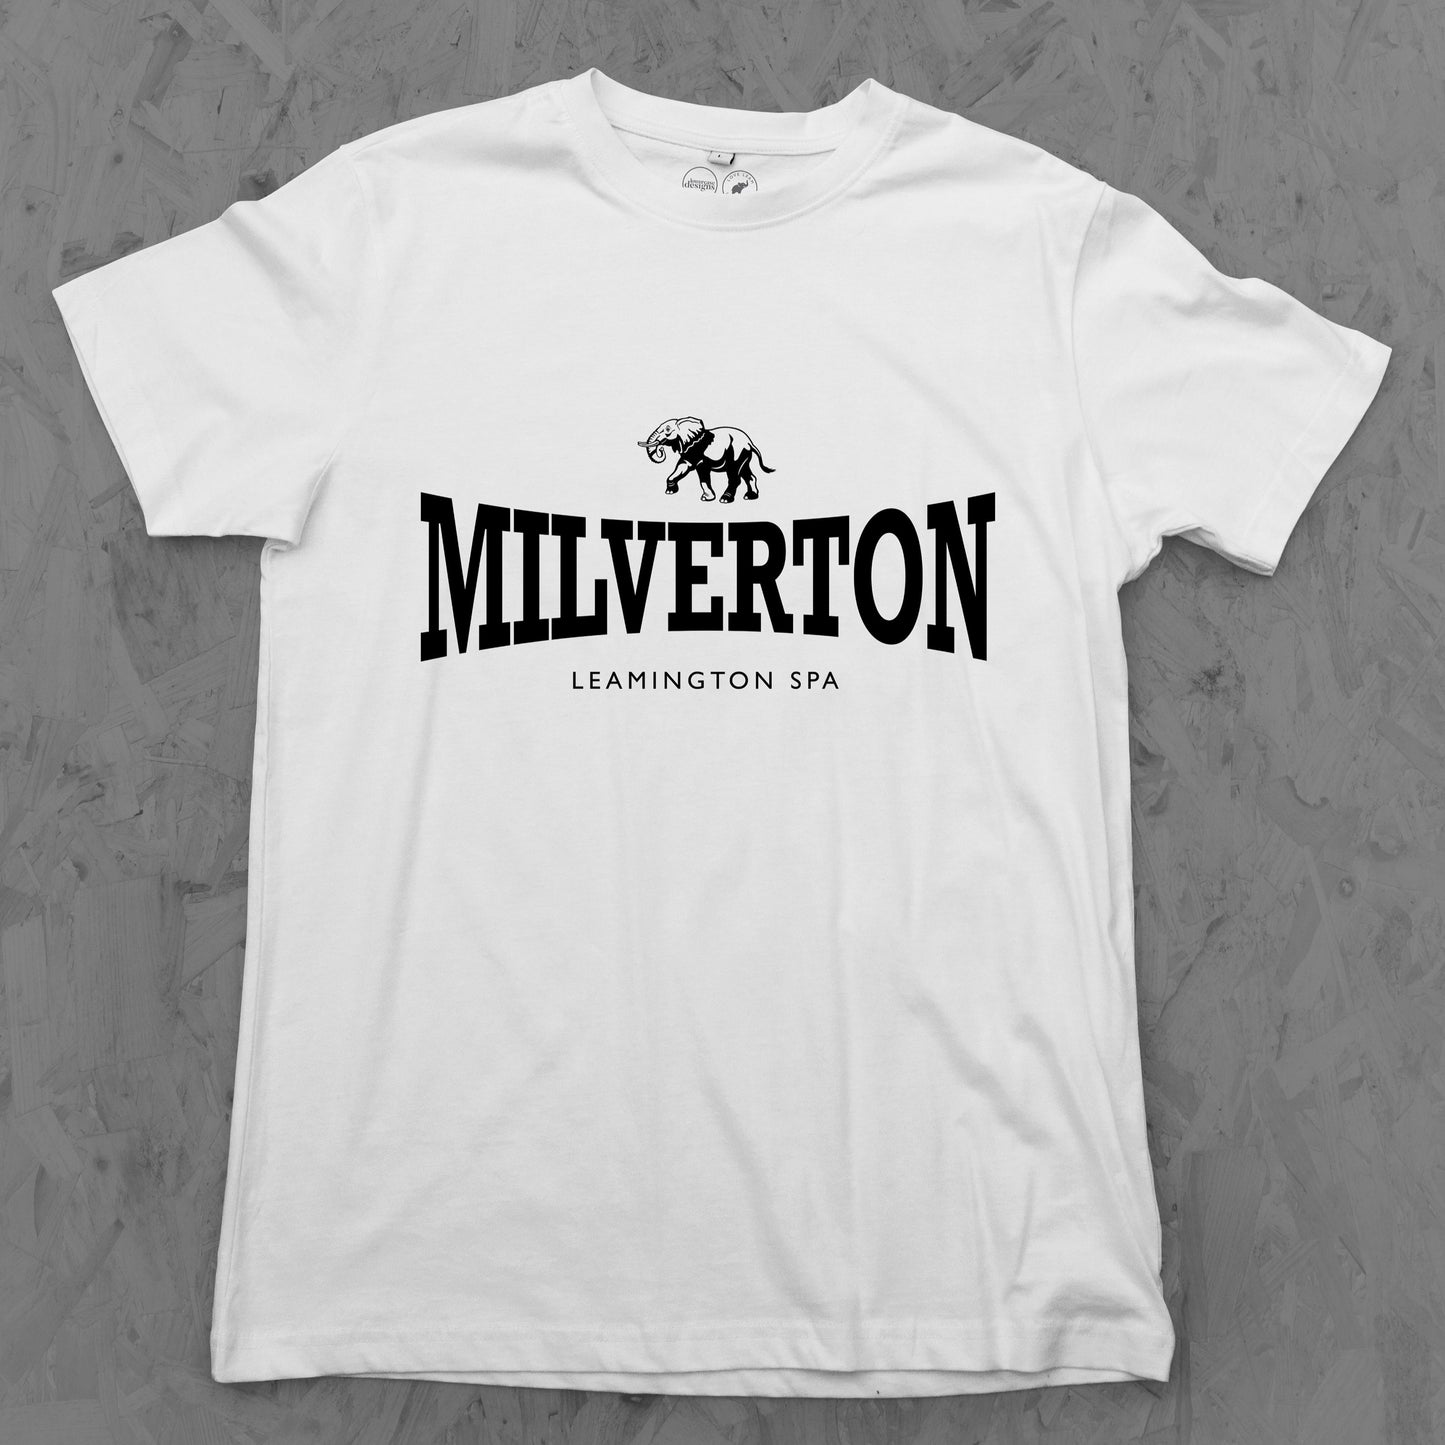 Milverton Tee - Child's sizes 3-14 years